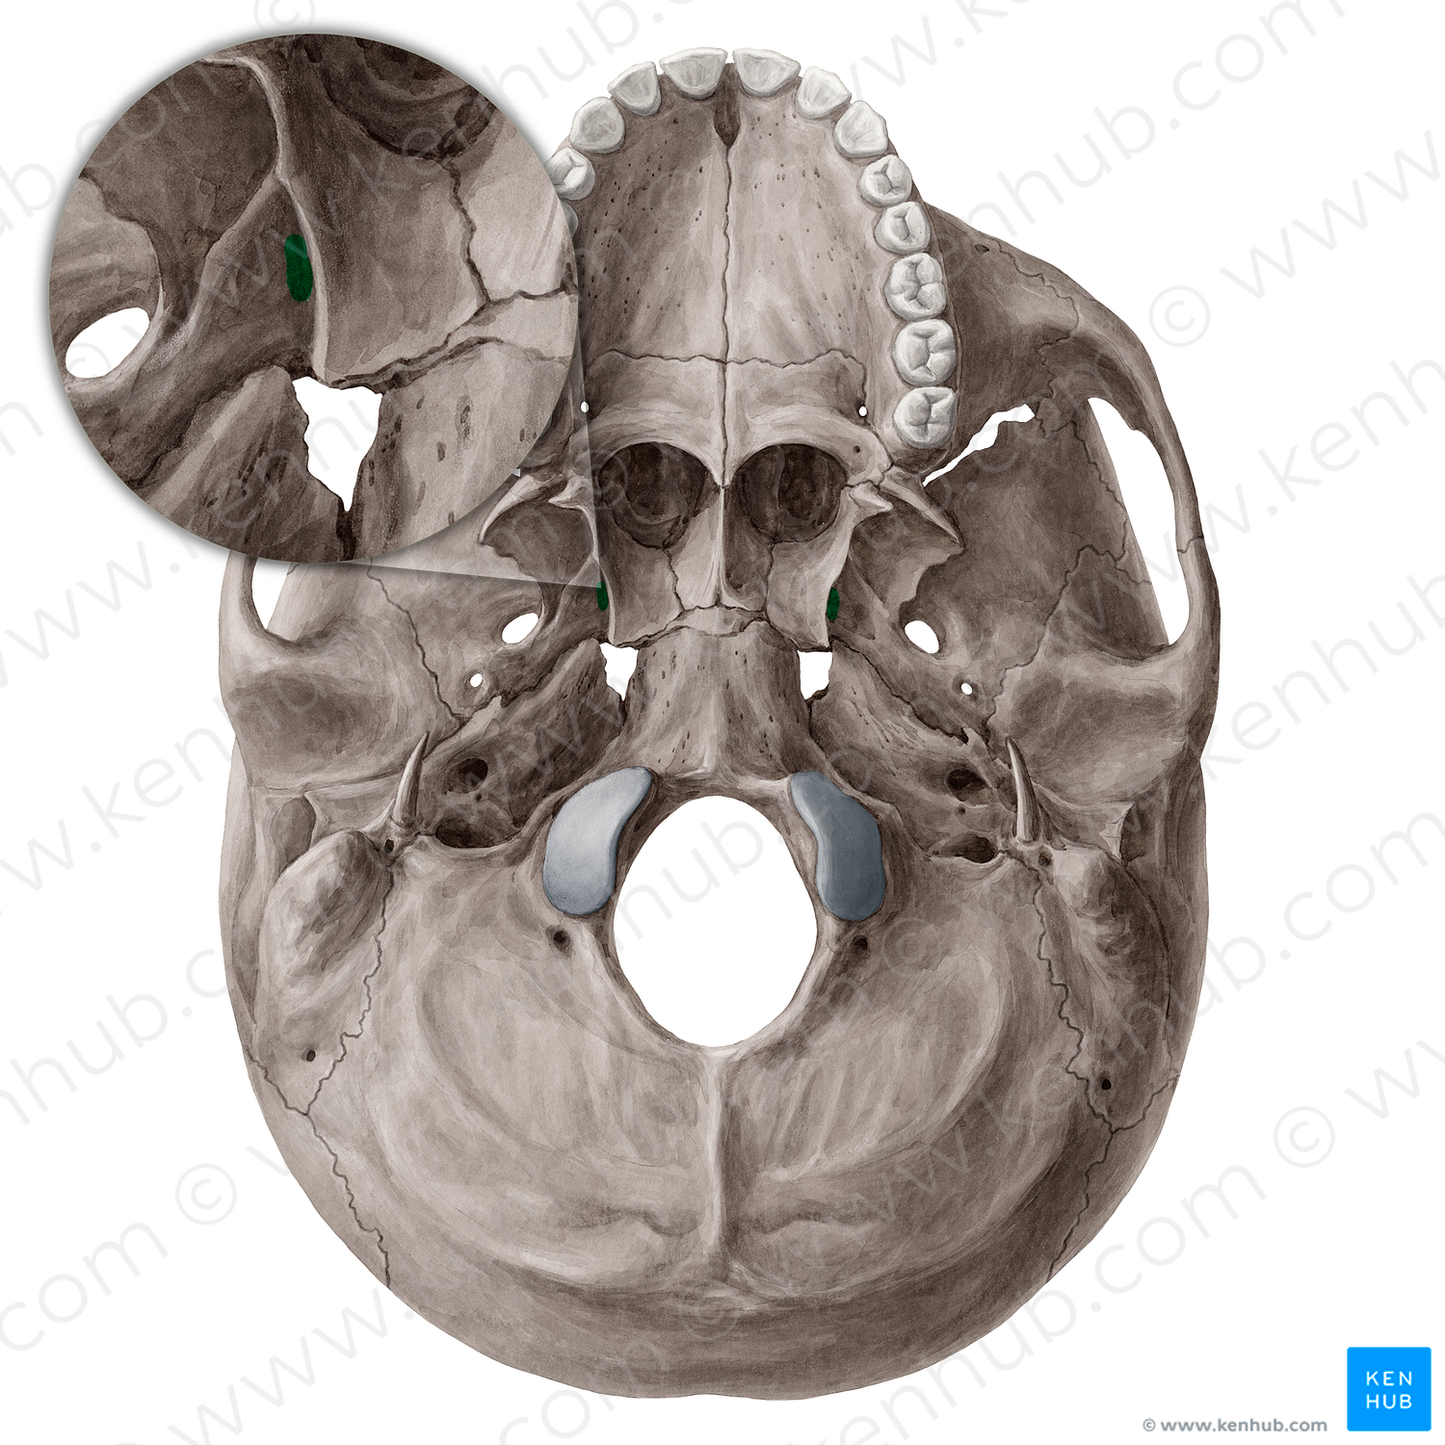 Scaphoid fossa of sphenoid bone (#21531)